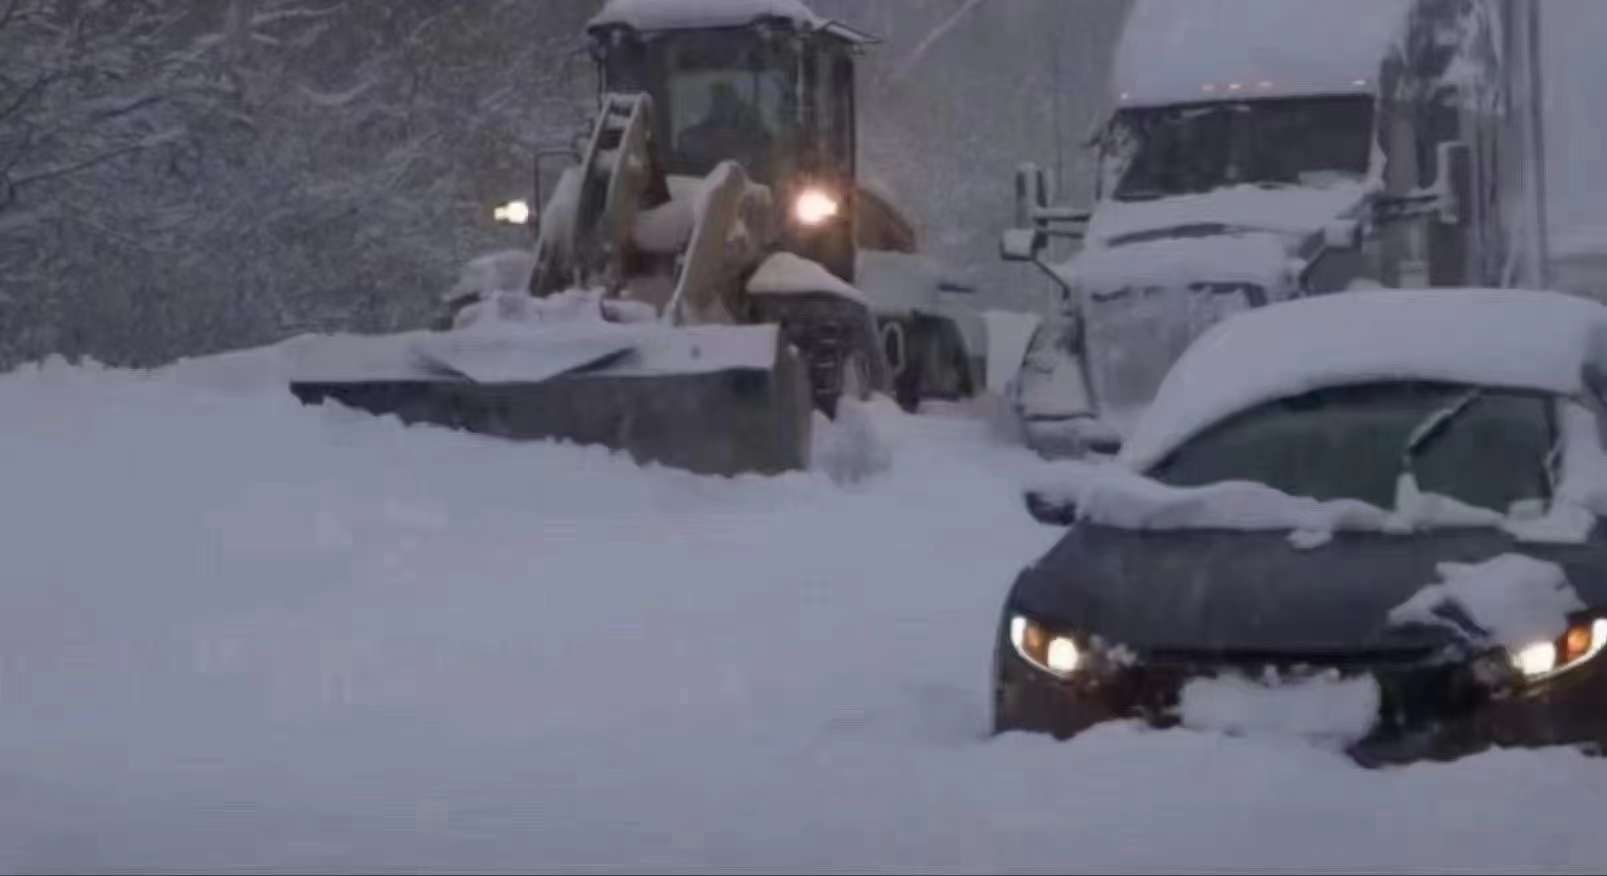 Gigantische Schneemauer rollt an: Heftiger Blizzard erwischt USA - n-tv.de